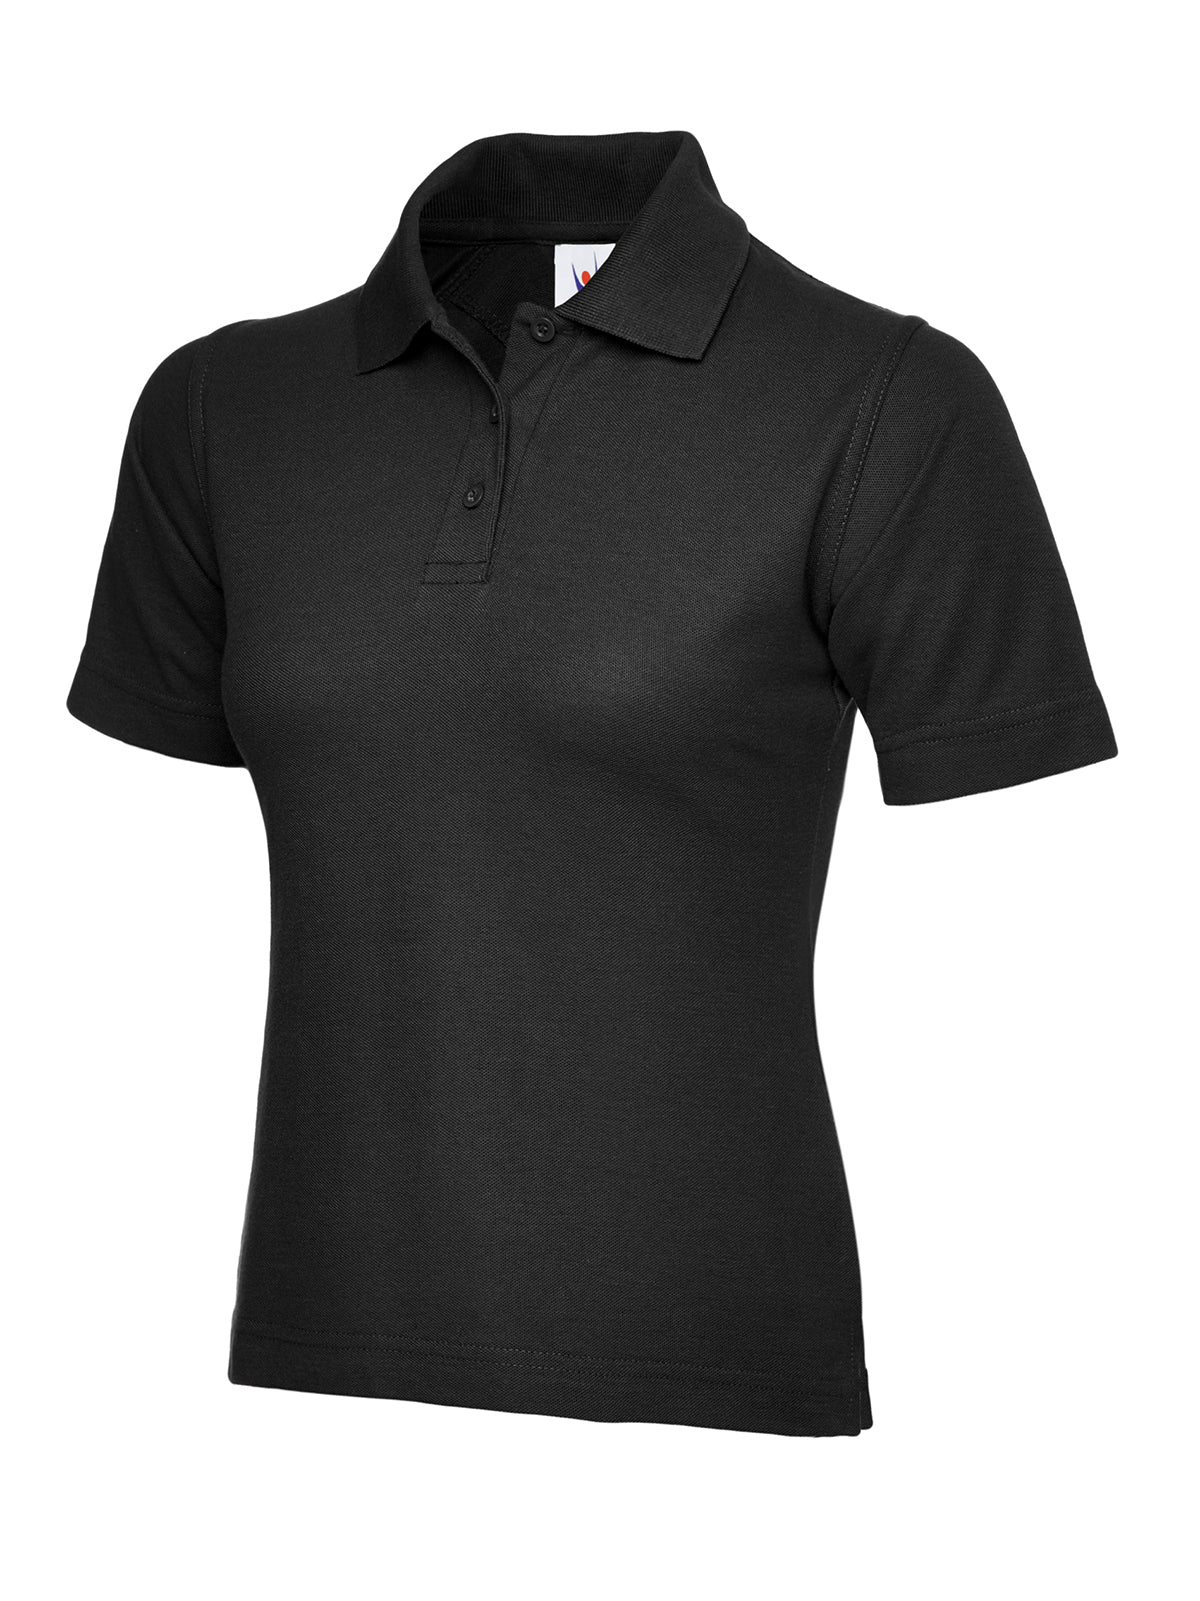 Uneek Ladies Classic Poloshirt UC106 - Black